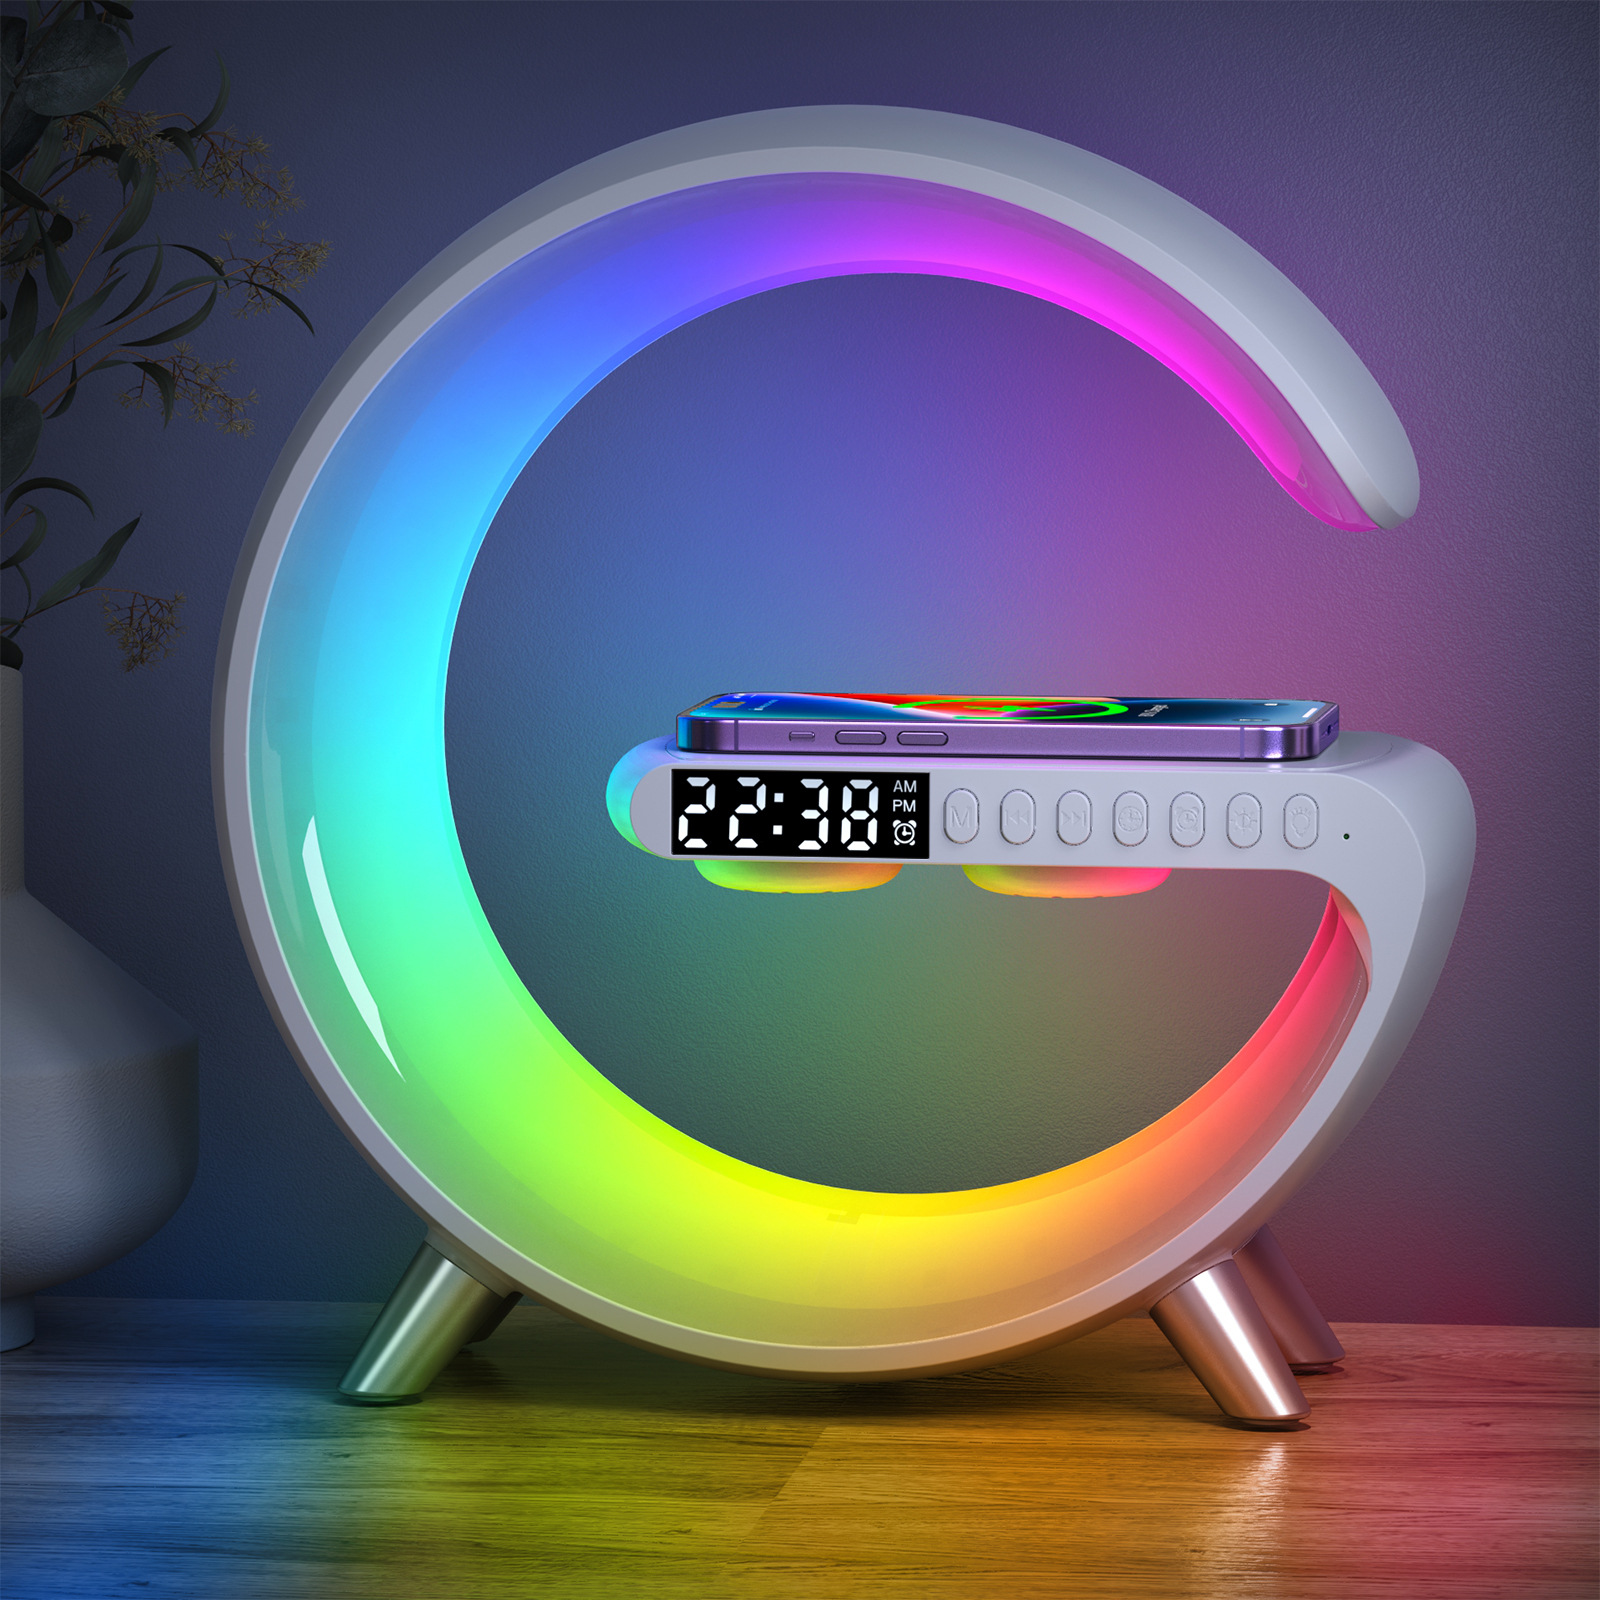 2022 Amazon Hot Selling Product Multi-Purpose Alarm Clock Small Night Lamp Wireless Charger Bluetooth Speaker Smart App Control